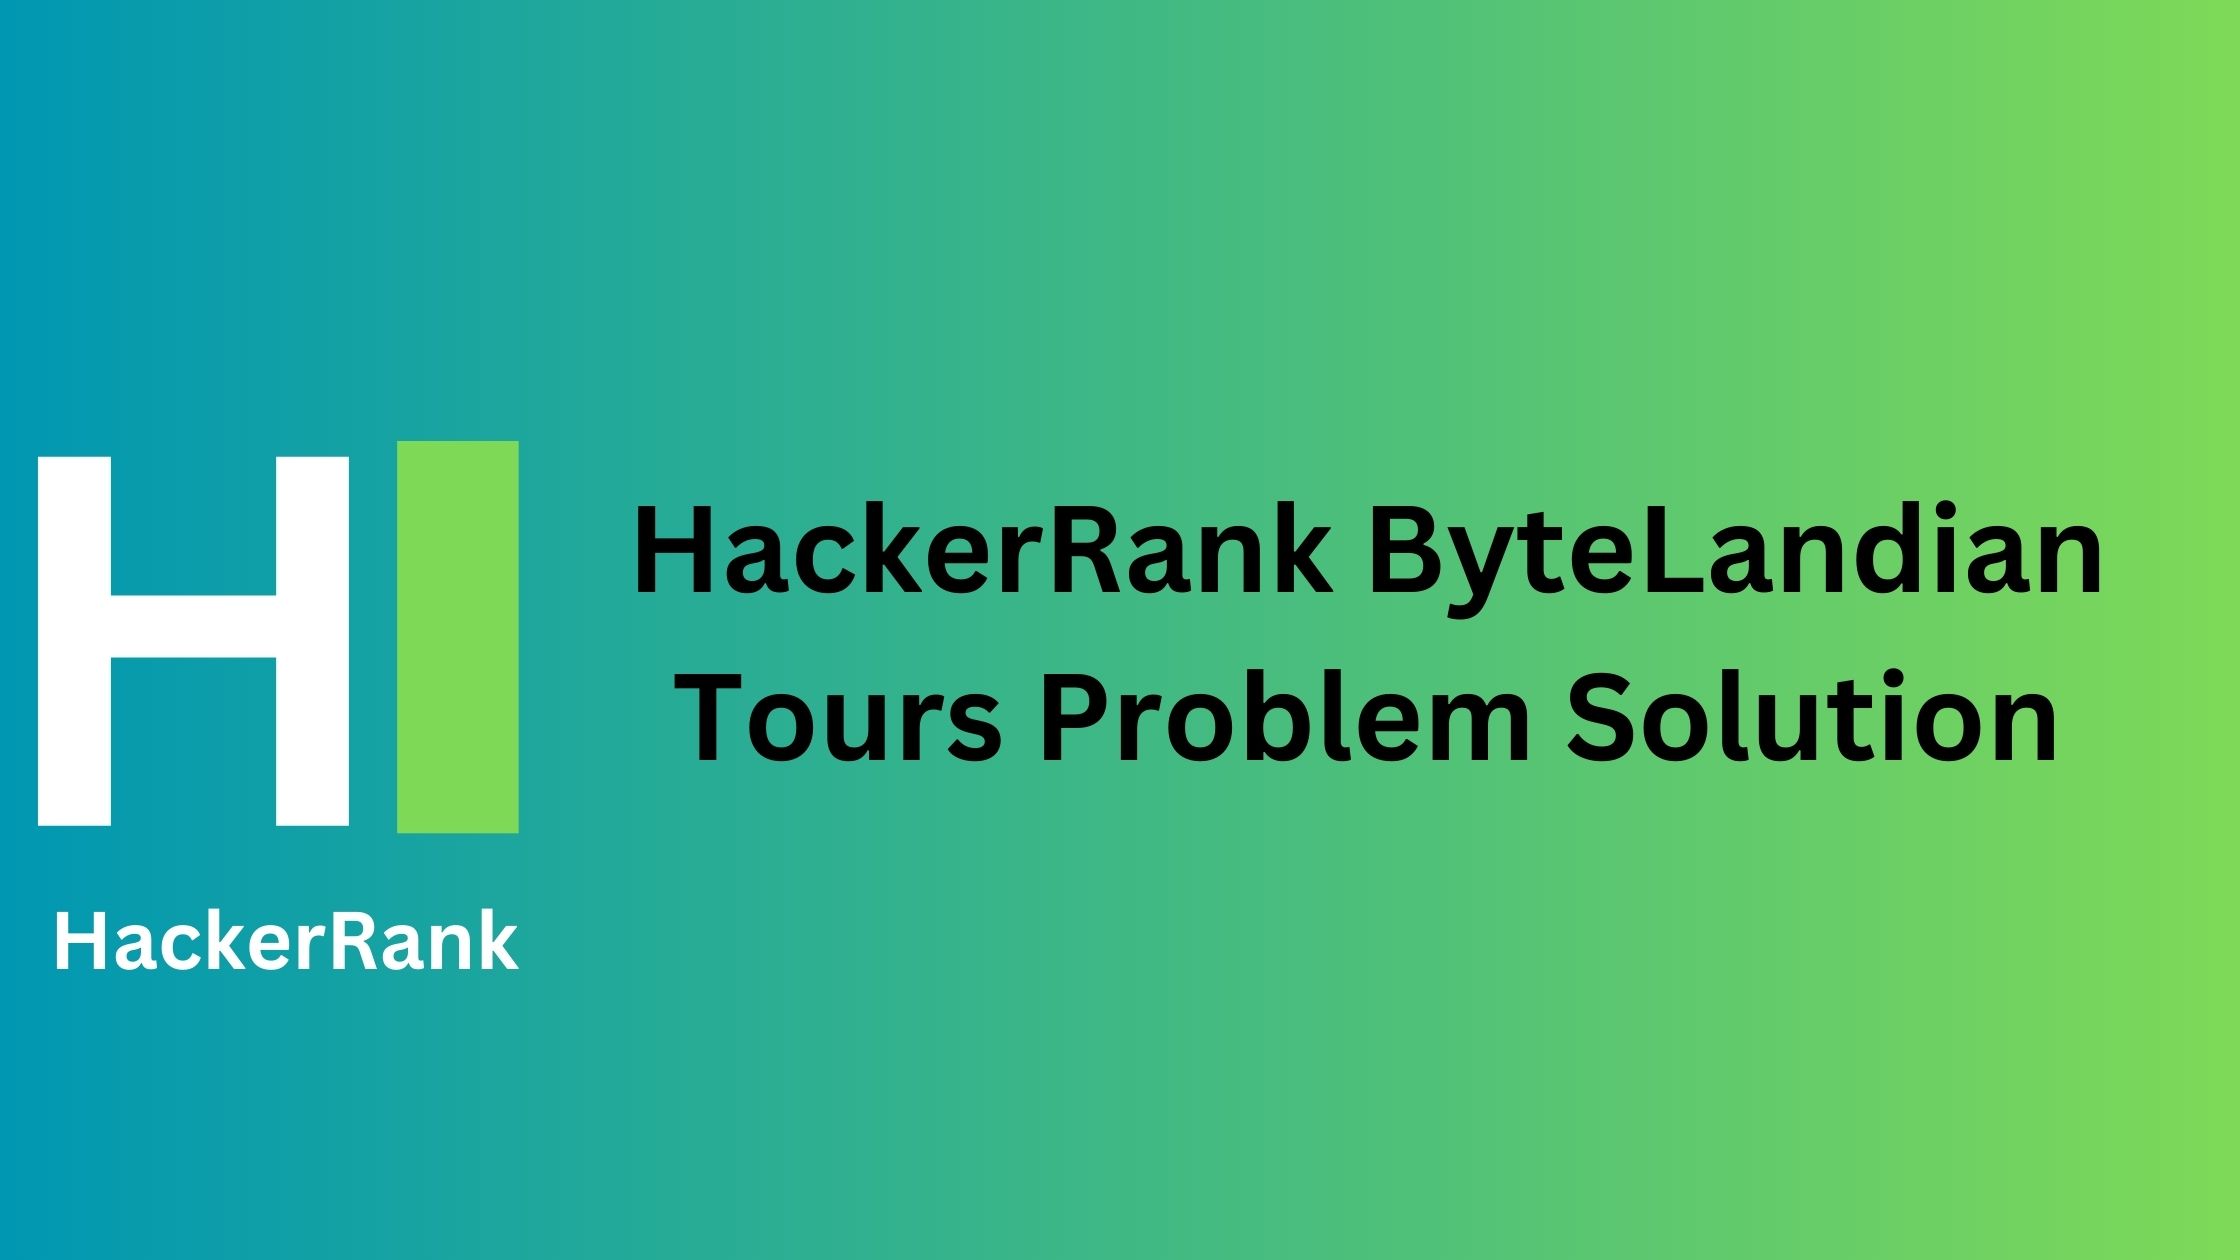 HackerRank ByteLandian Tours Problem Solution